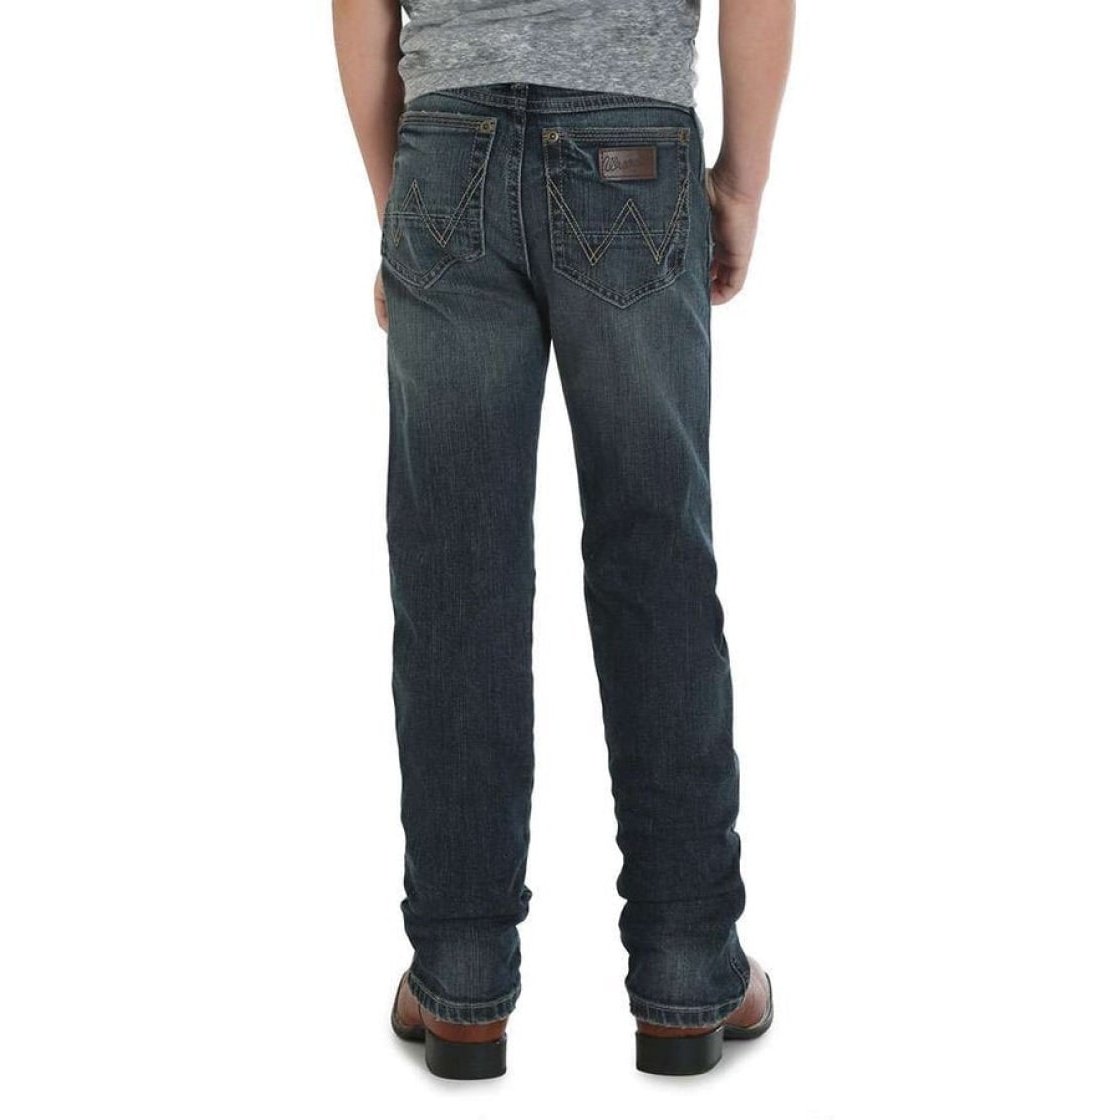 Wrangler Boy’s Jeans Retro® Slim Straight Sizes 1-7, 88JWZJM - Wrangler